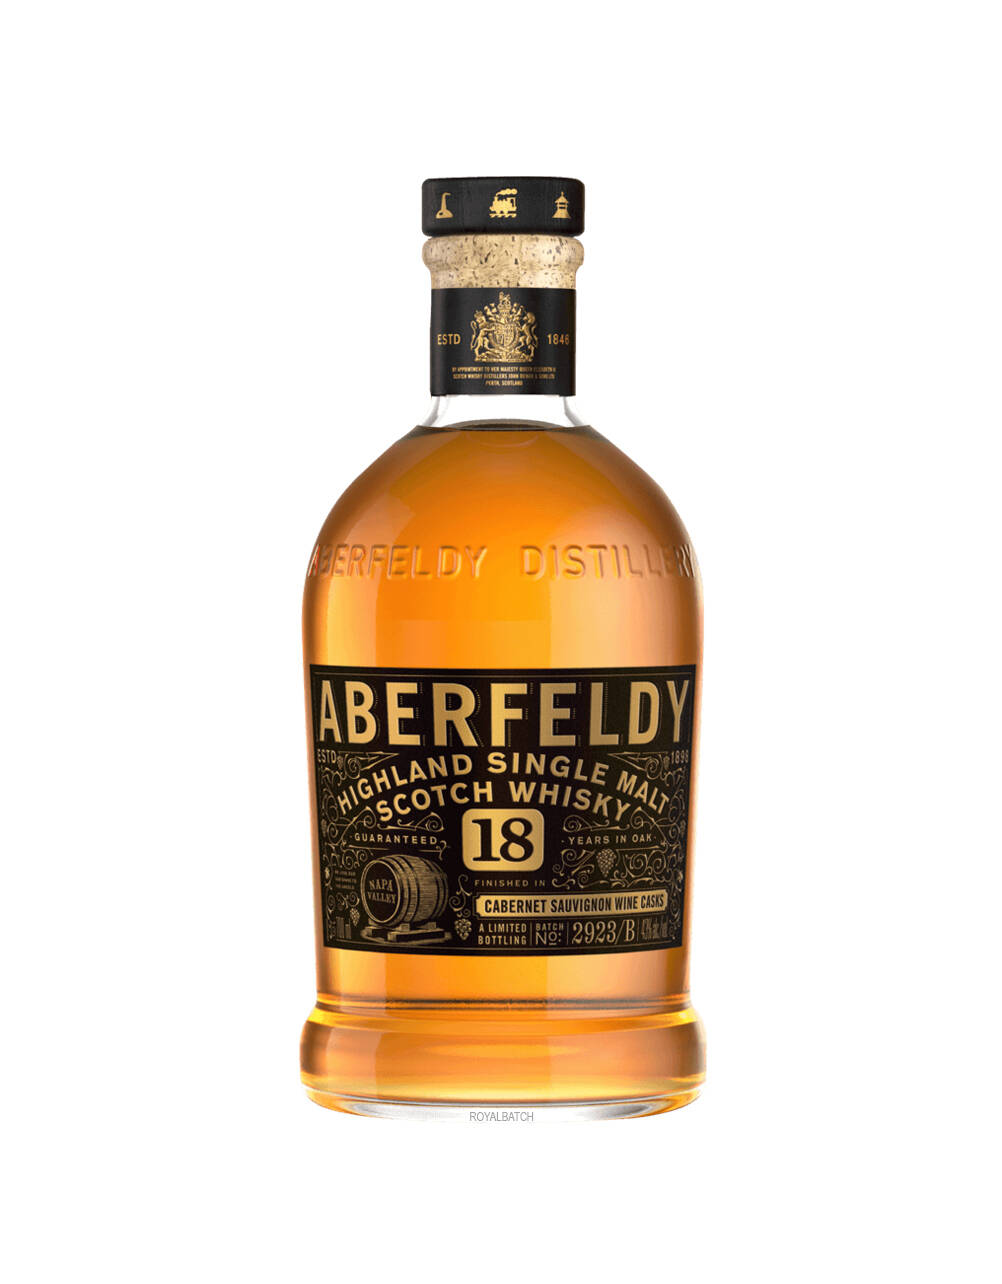 Aberfeldy 12 Year Old Single Malt Scotch Whisky Gold Bar Gift Pack